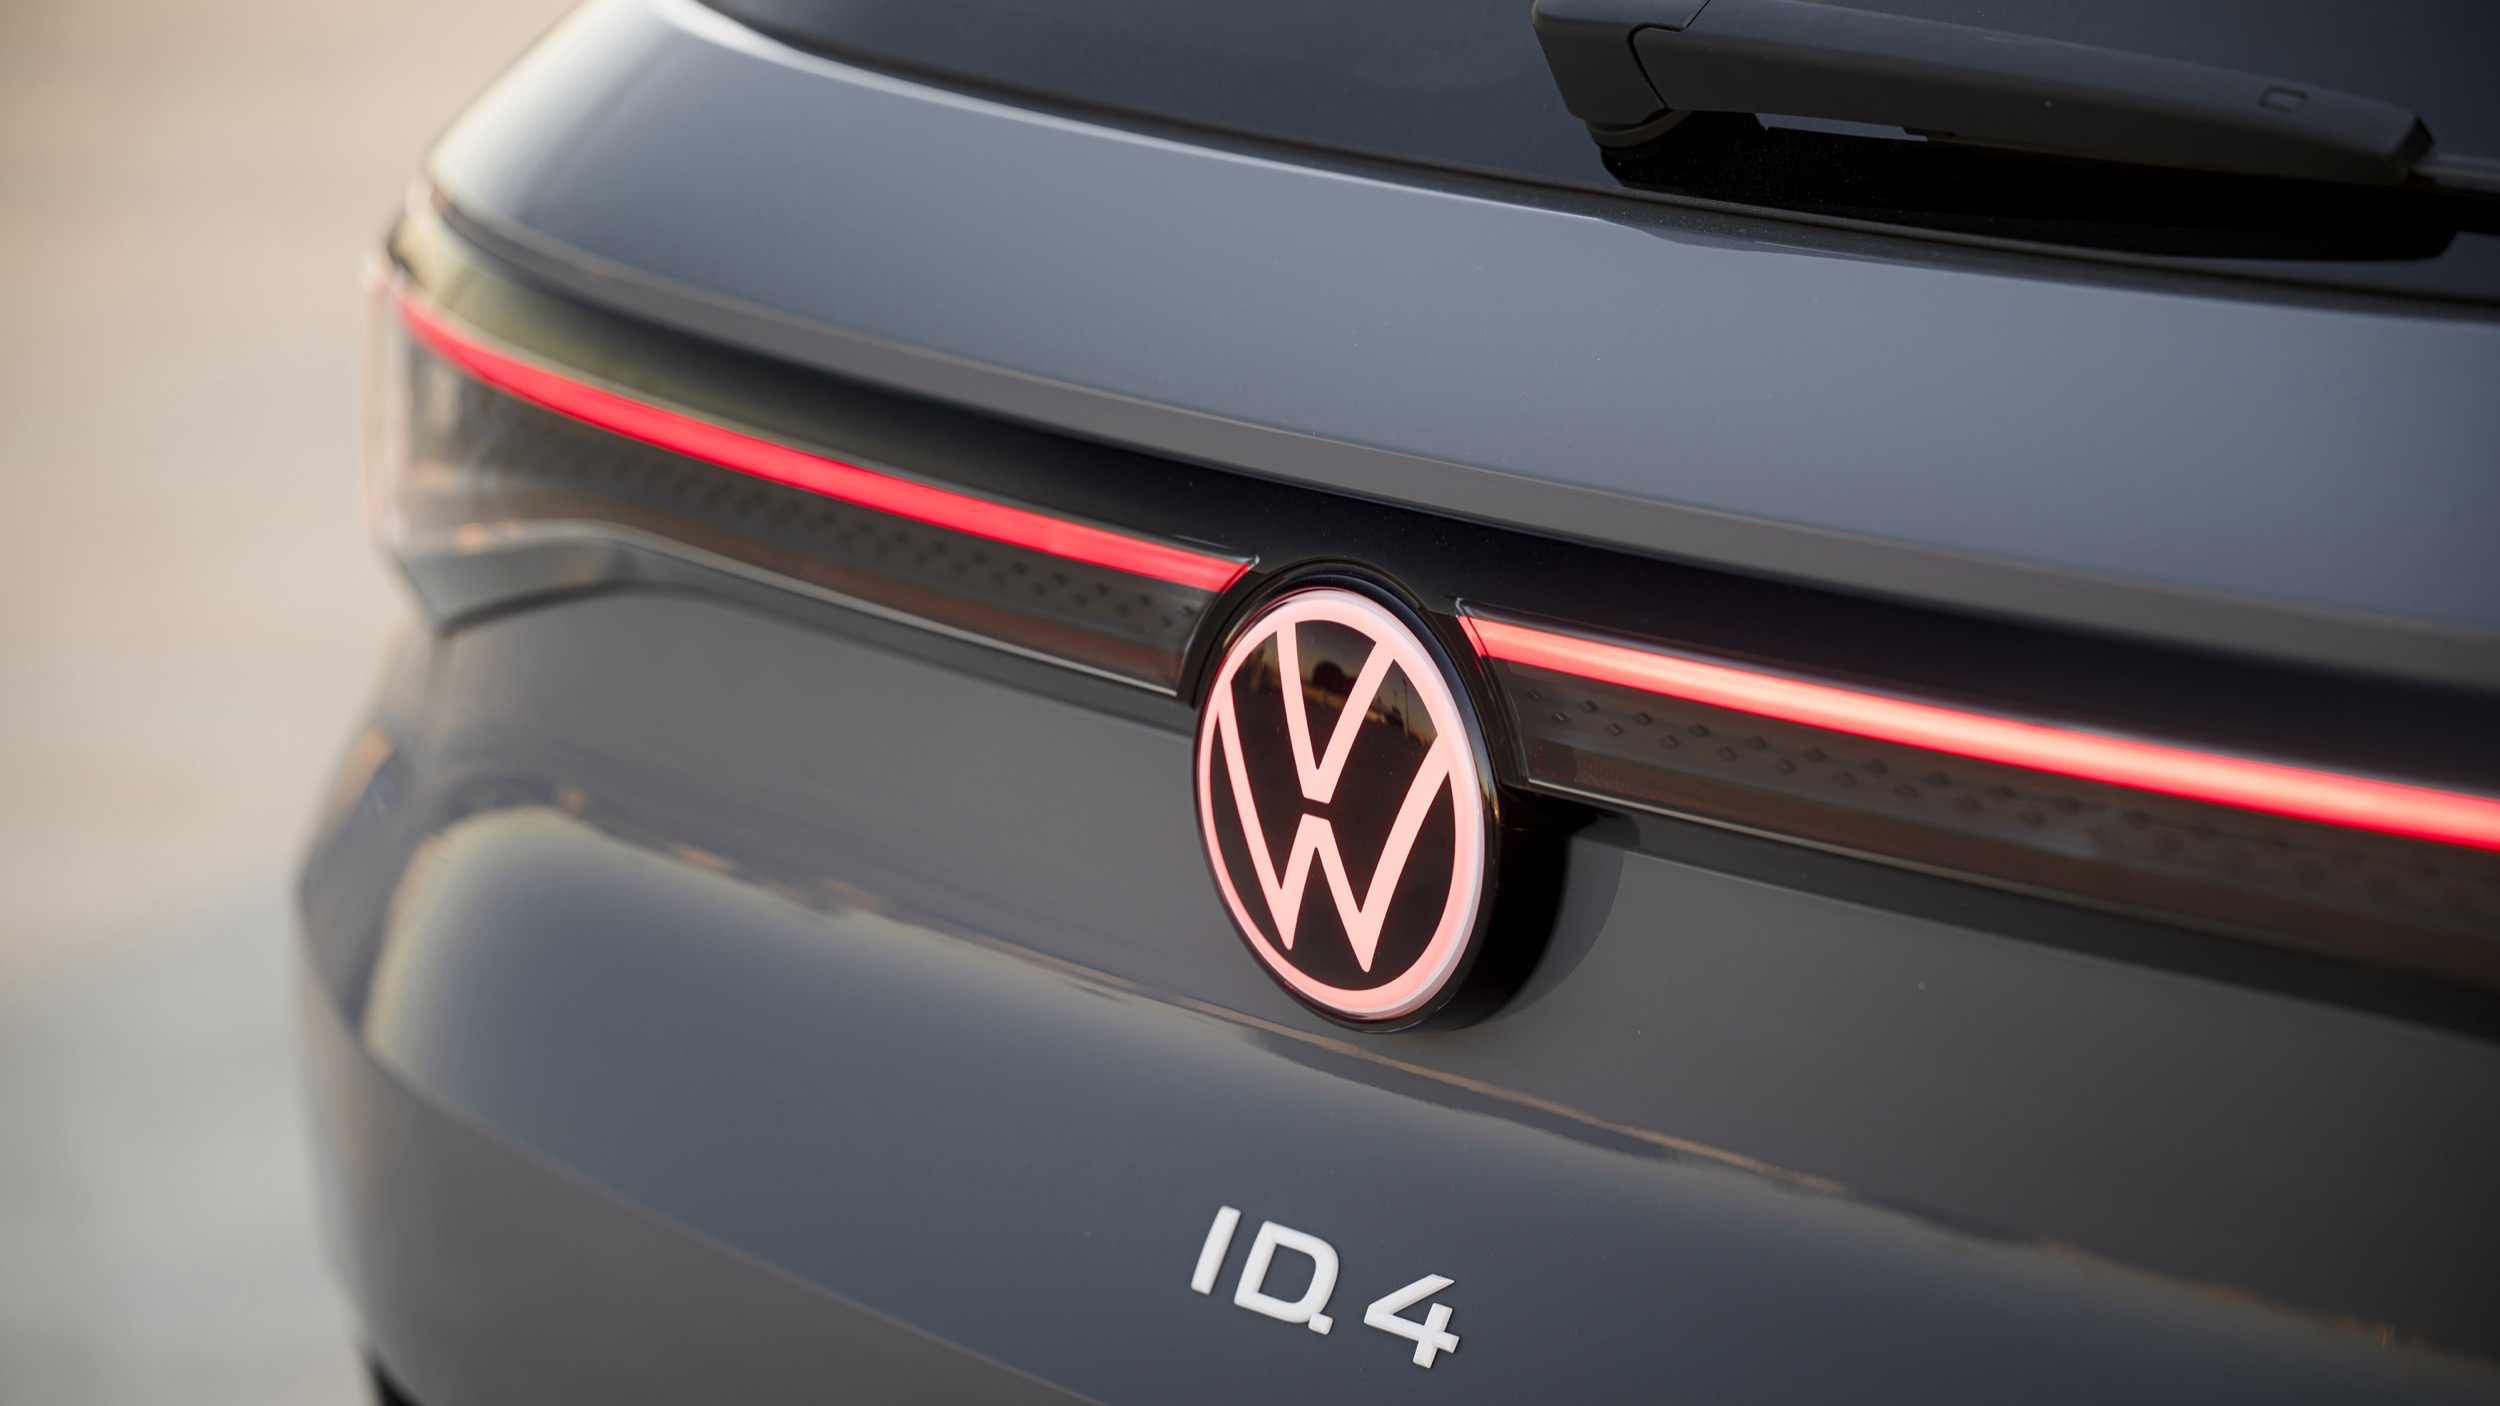 Volkswagen CEO says clunky infotainment overhaul starts now